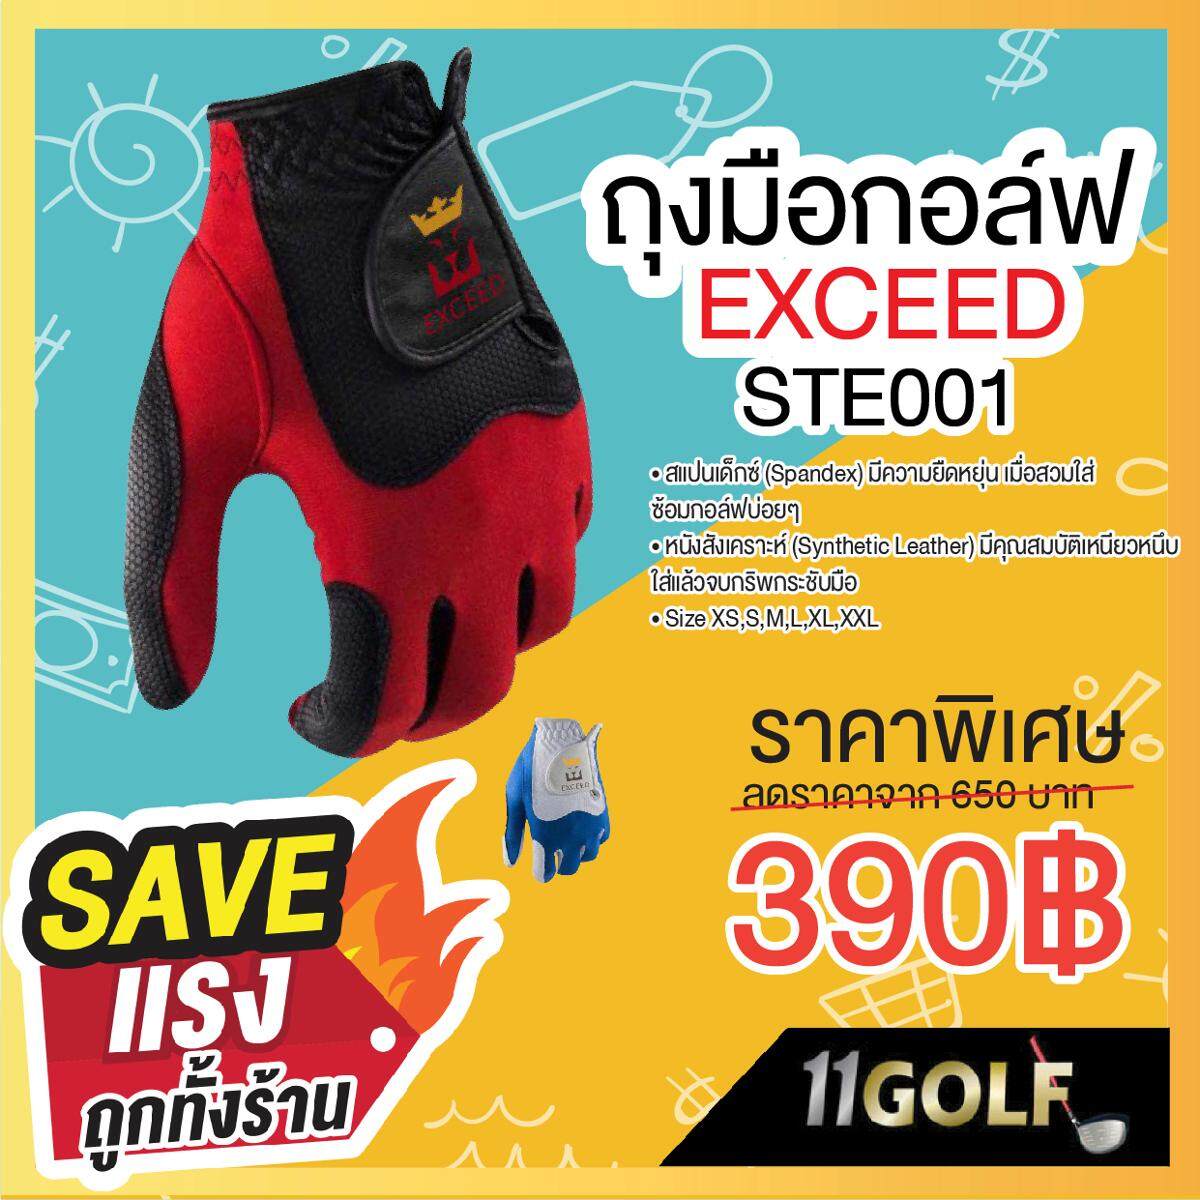 11GOLF EXCEED รหัสสินค้า STE001 ถุงมือ Exceed ราคาถูกที่สุดในประเทศไทย!!! ข้อหนึ่ง สแปนเด็กซ์ (Spandex) มีความยืดหยุ่น จัดส่งฟรทั่วประเทศ